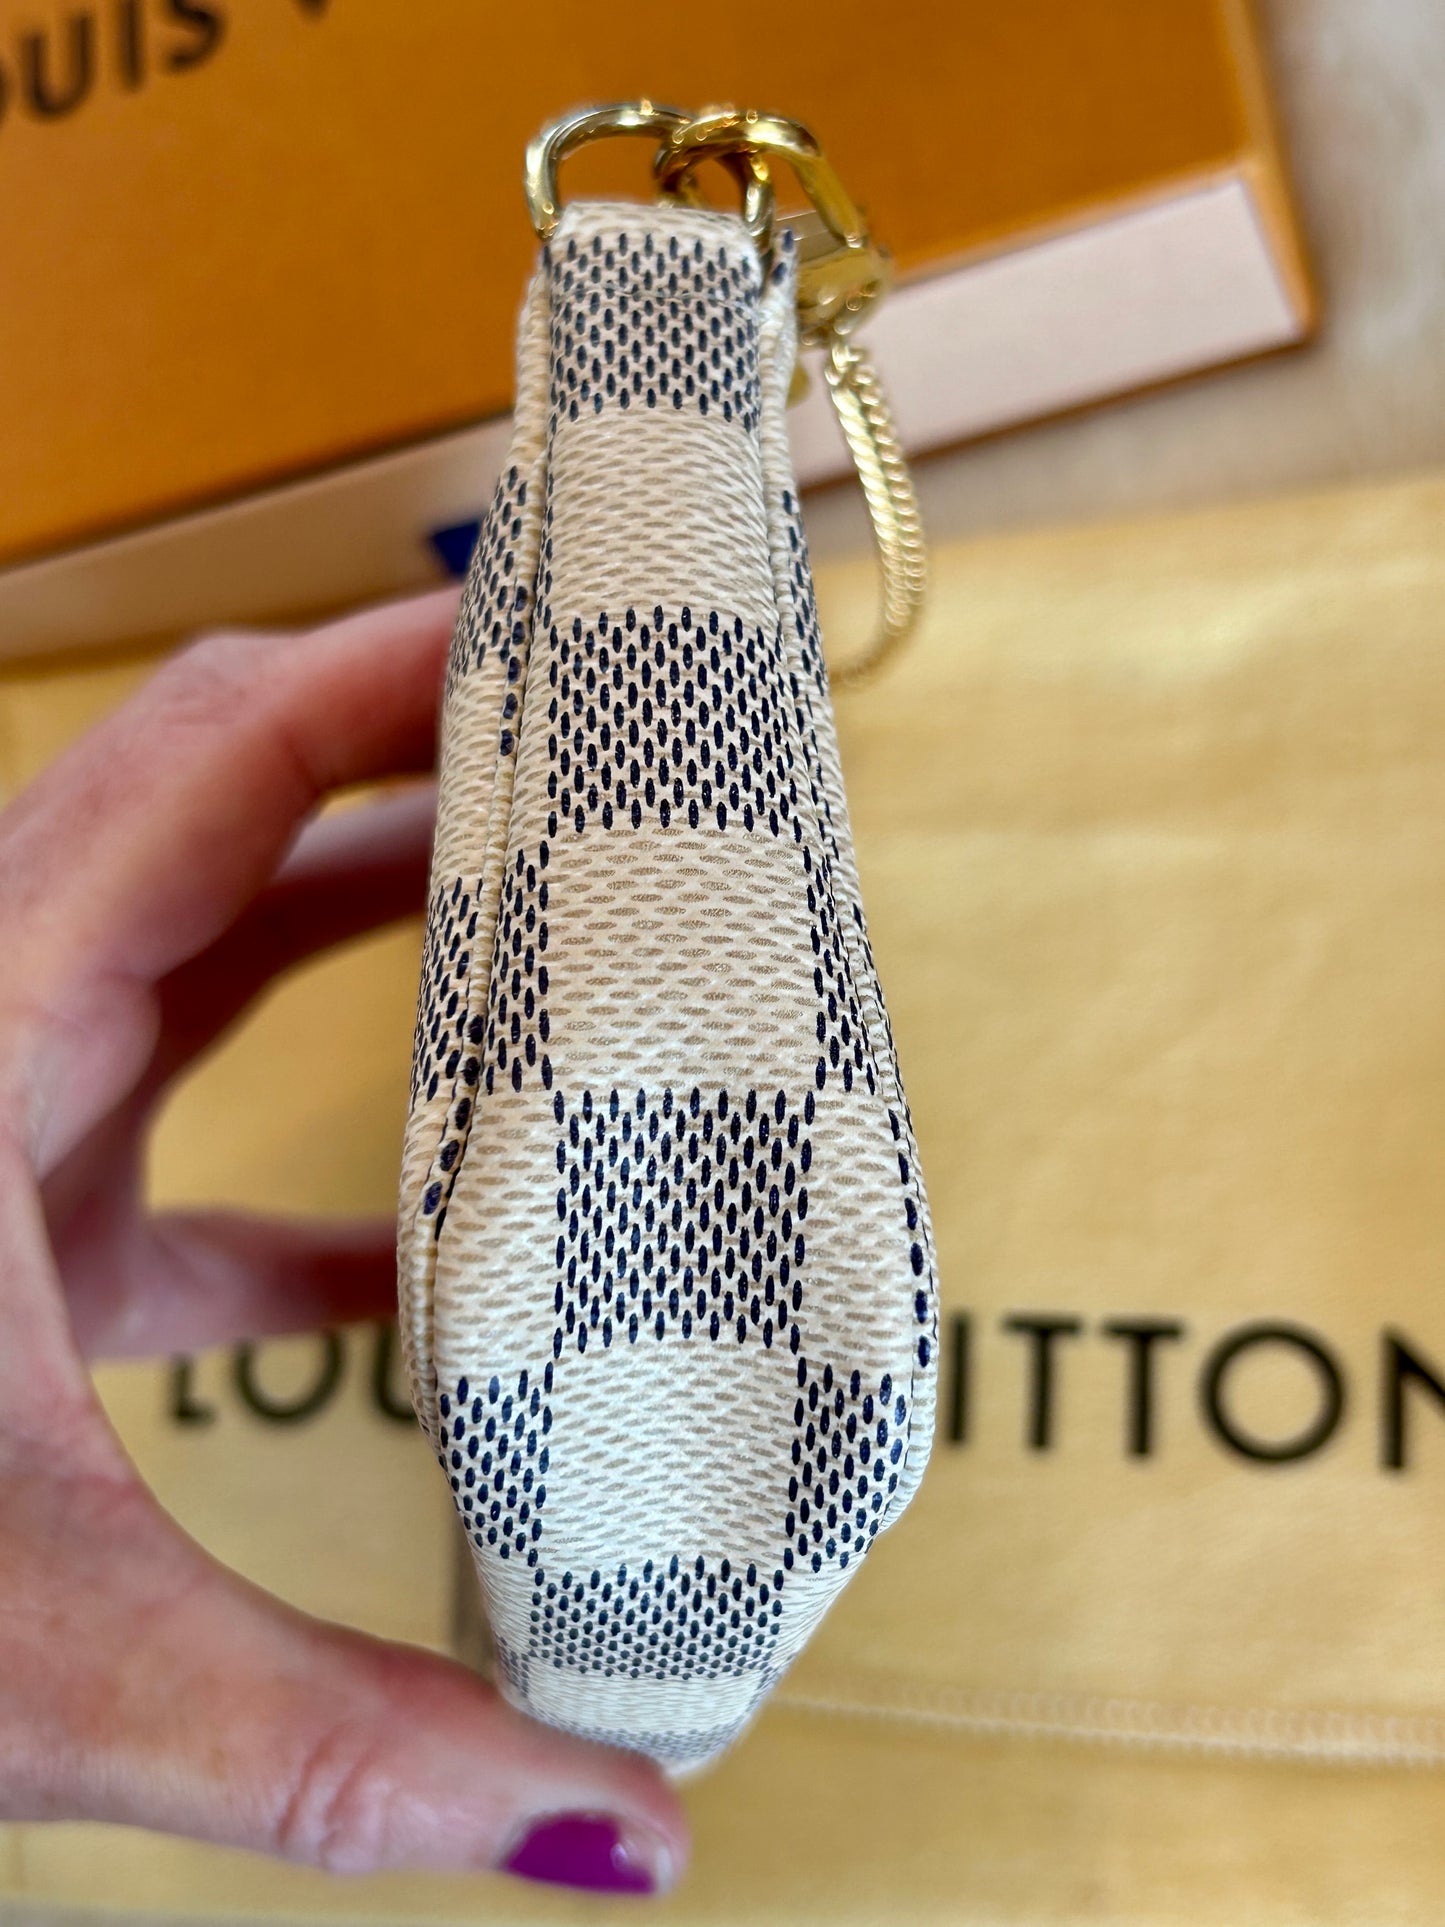 Louis Vuitton Mini Pochette Damier Azur